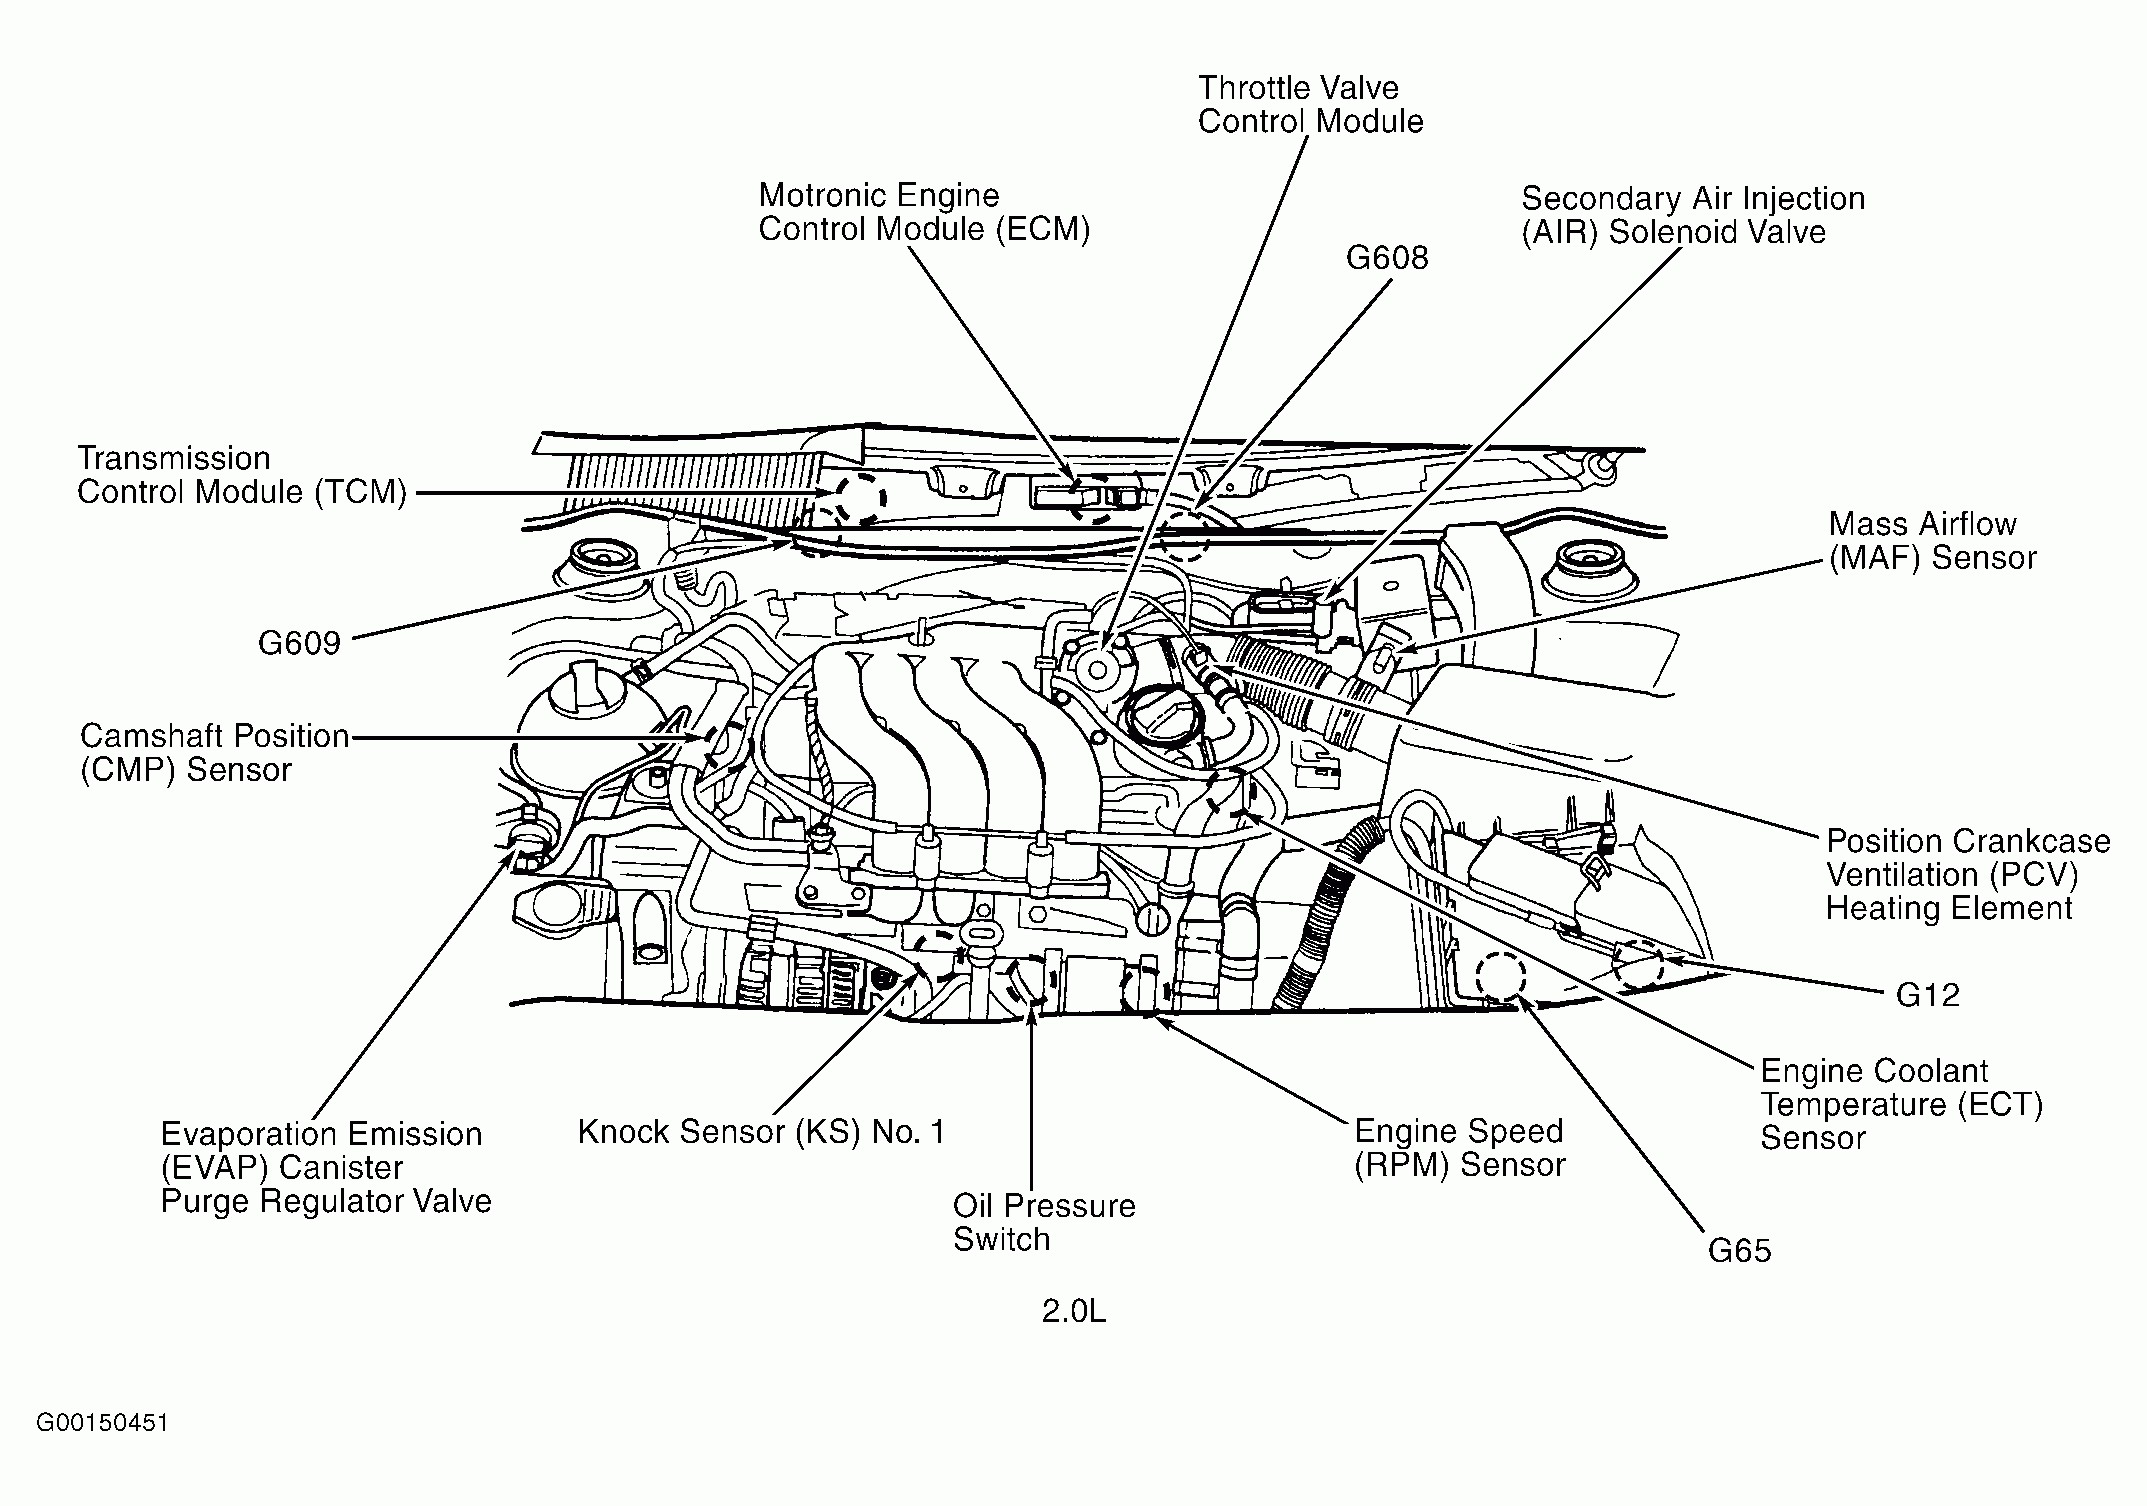 Vw 1 8 Turbo Engine Diagram Vw Passat 2 0 Turbo Engine Diagram Download Wiring Diagrams • Of Vw 1 8 Turbo Engine Diagram